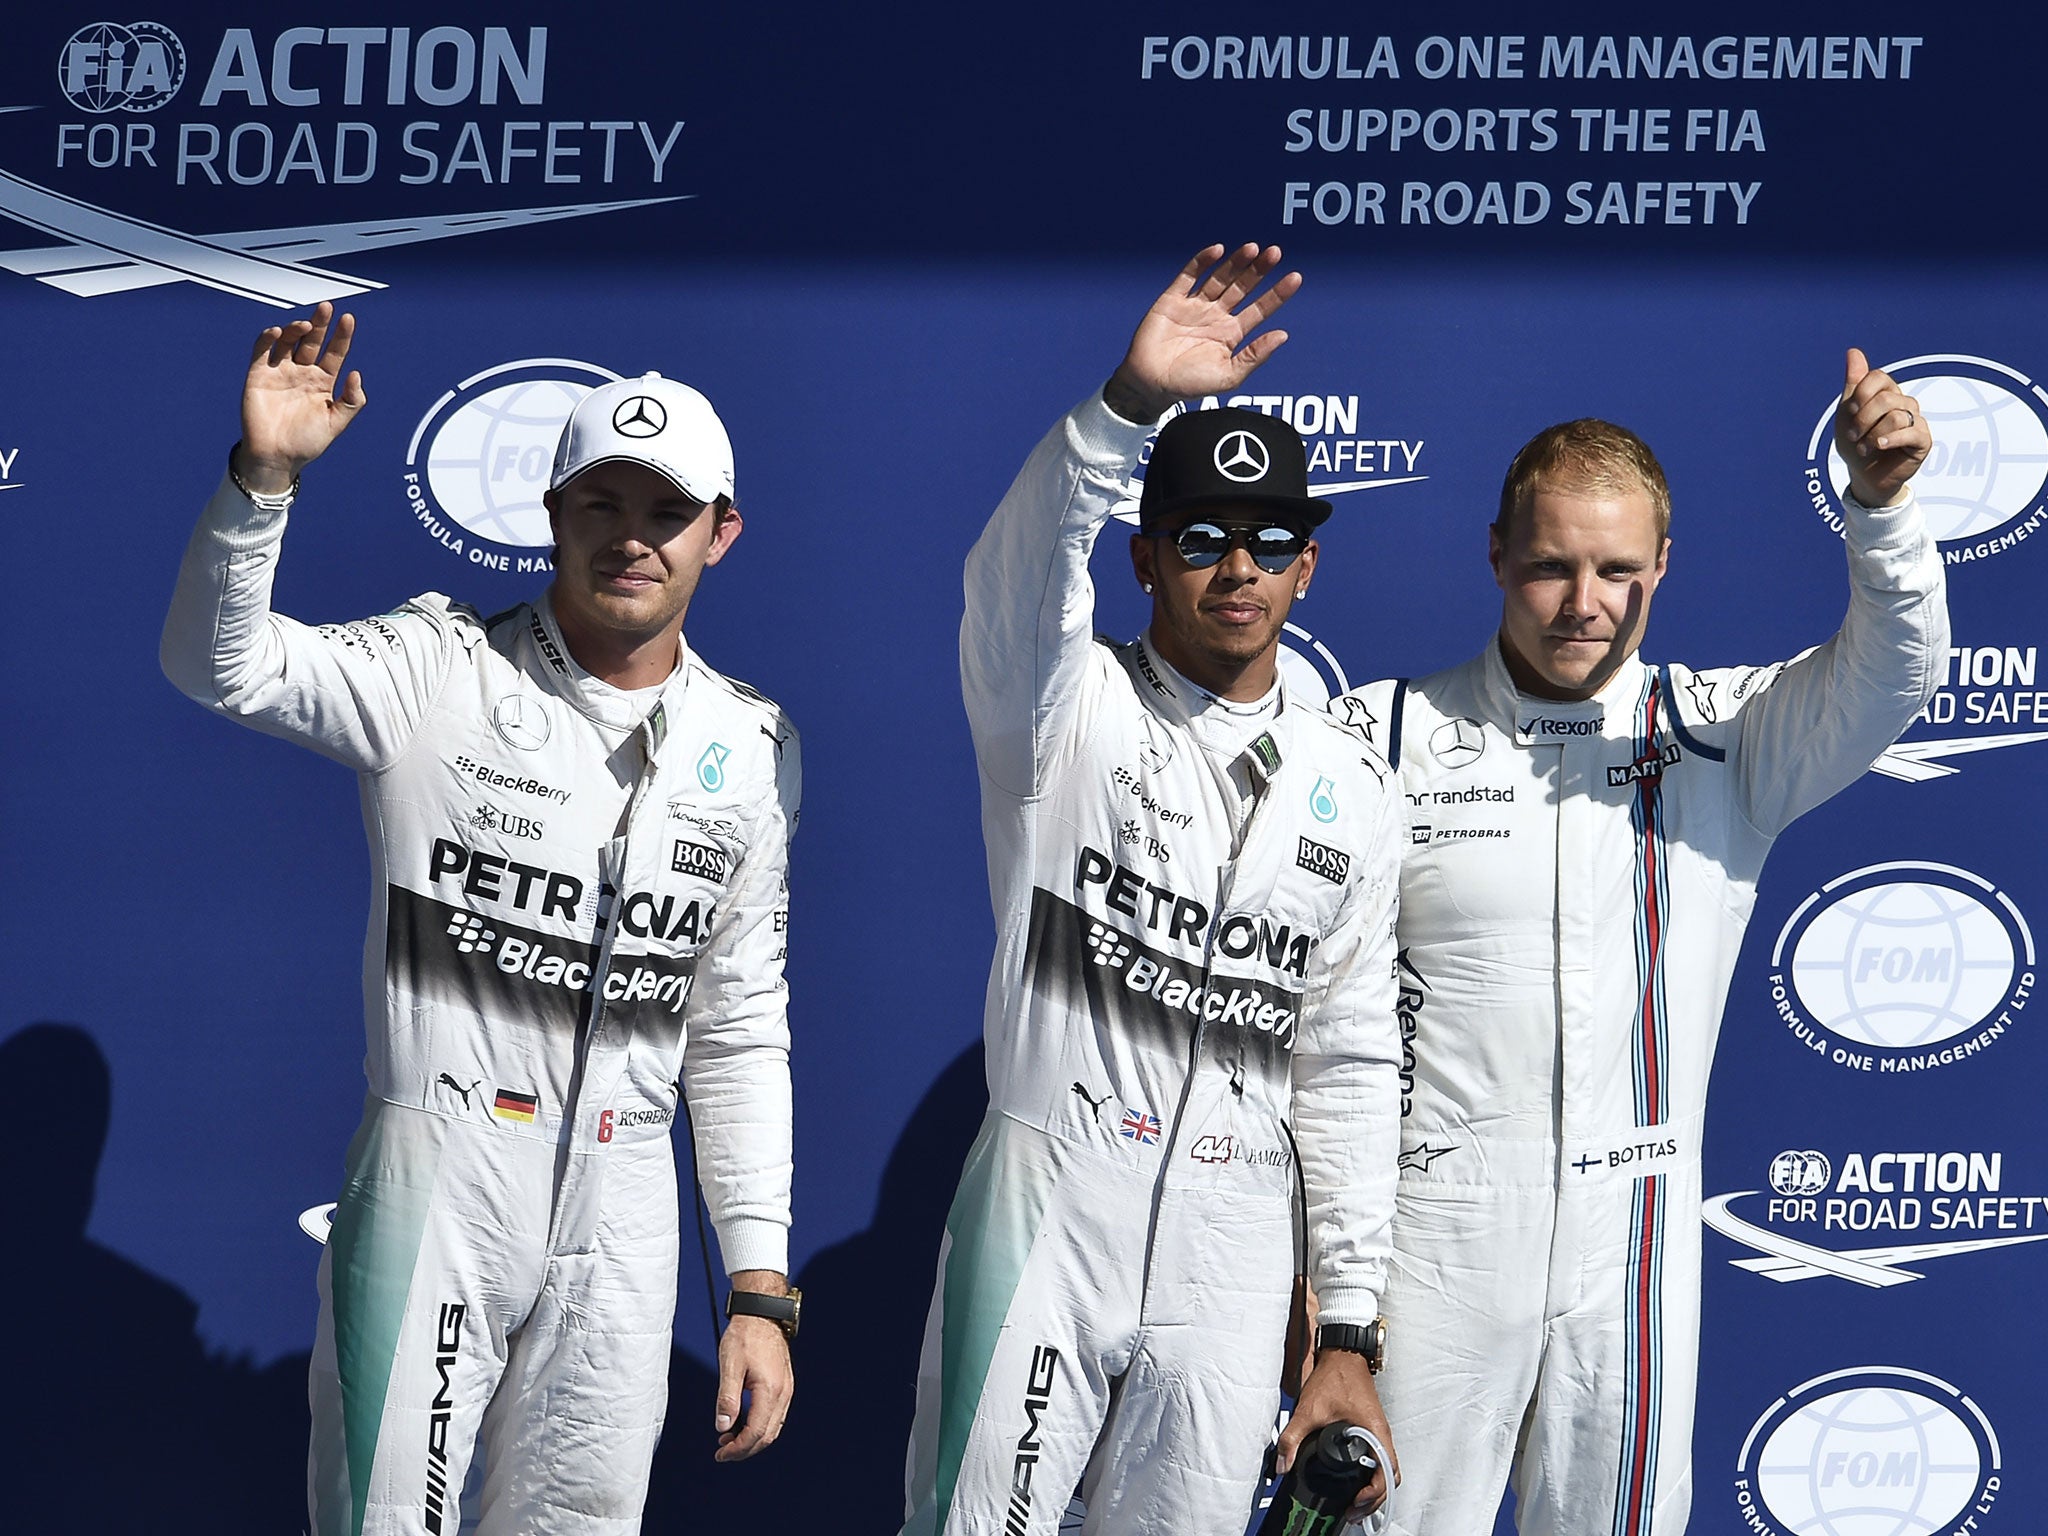 Lewis Hamilton will start the Belgian Grand Prix from pole ahead of Nico Rosberg and Valterri Bottas